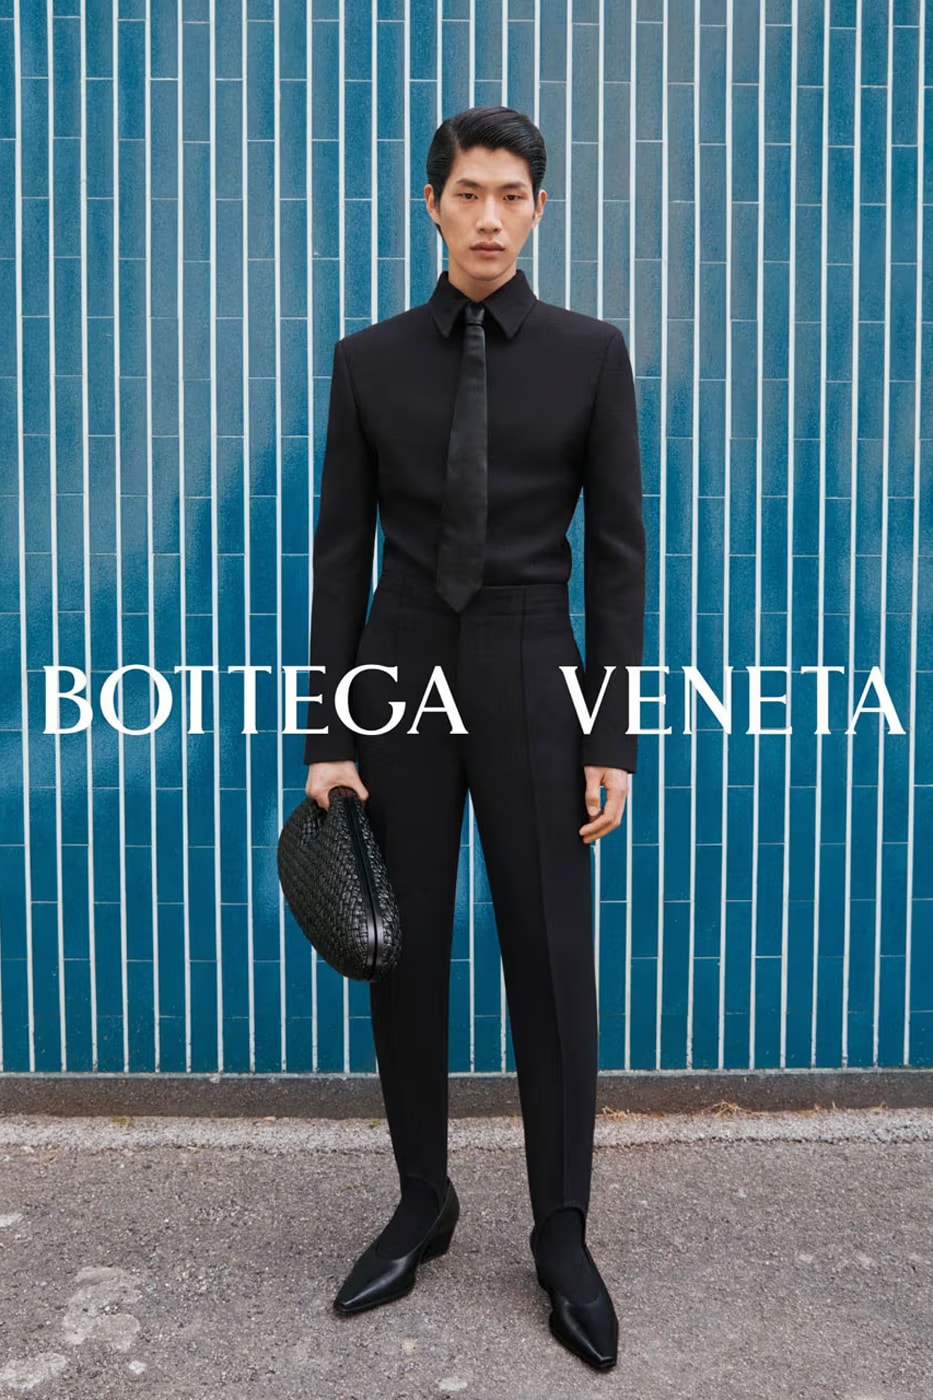 Bottega Veneta Fall/Winter 2021 Campaign - fashionotography